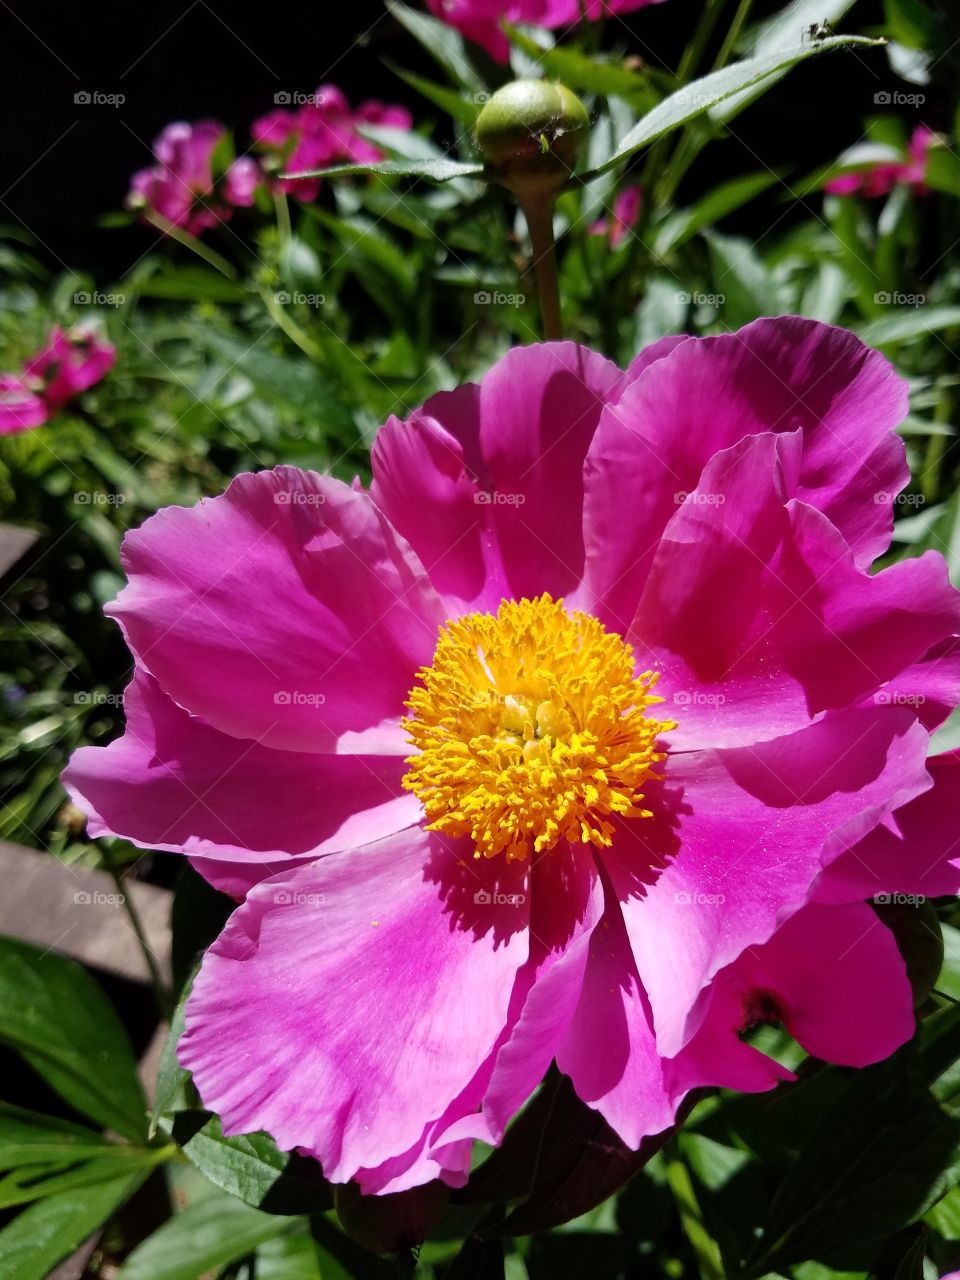 Big Bloom